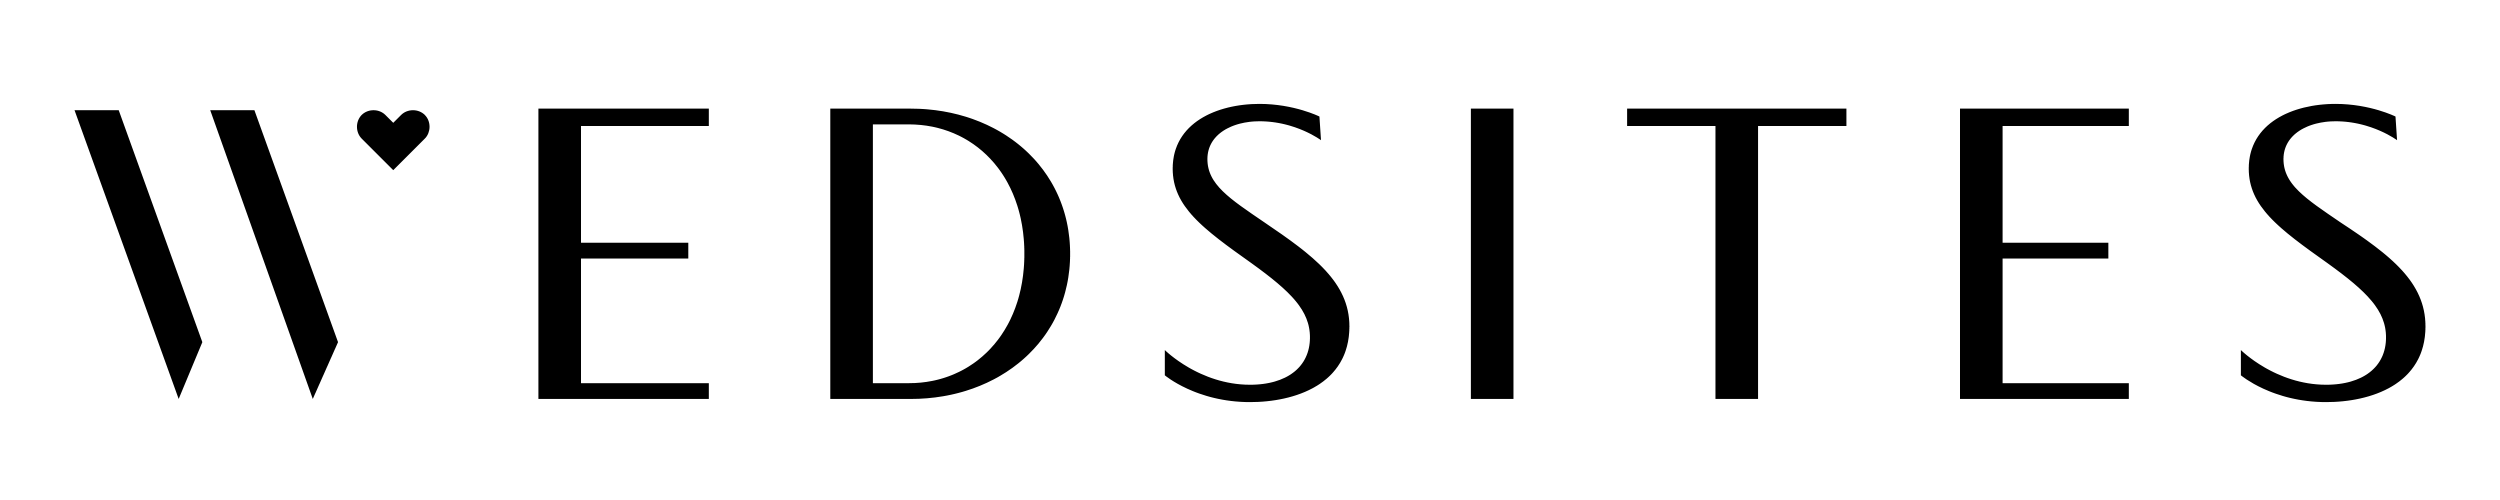 WedSites wordmark logo